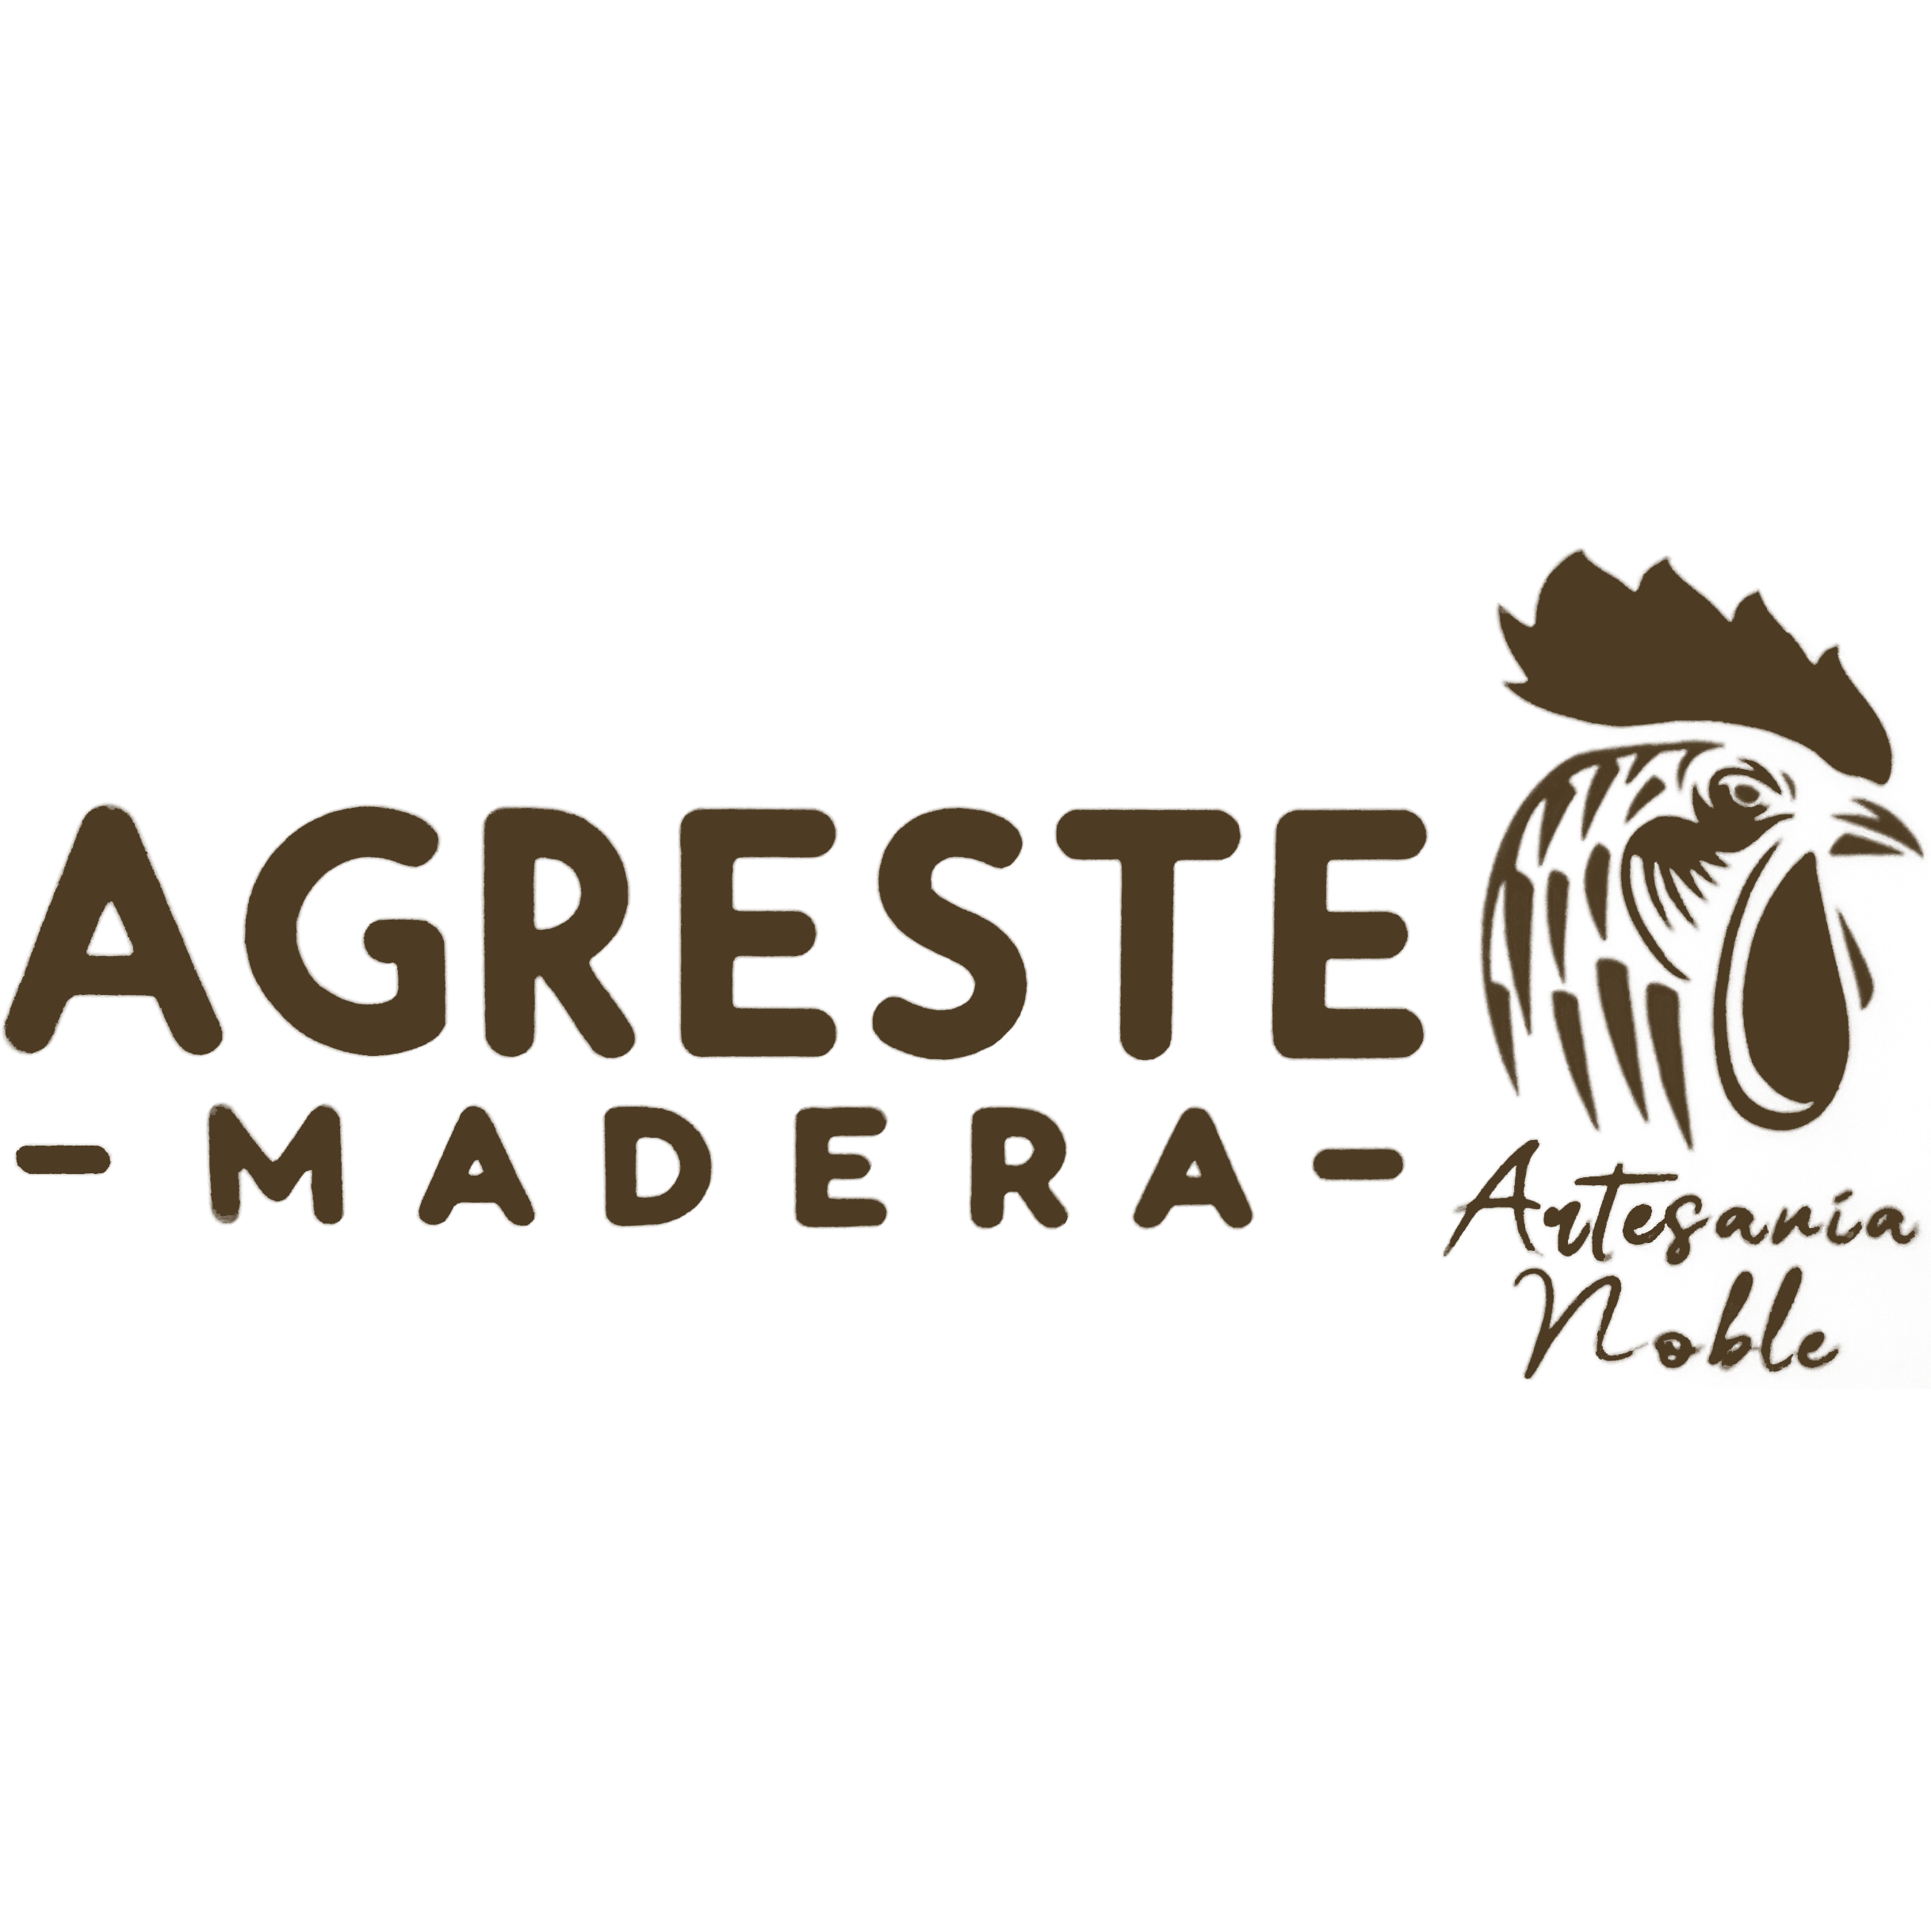 Agreste Madera